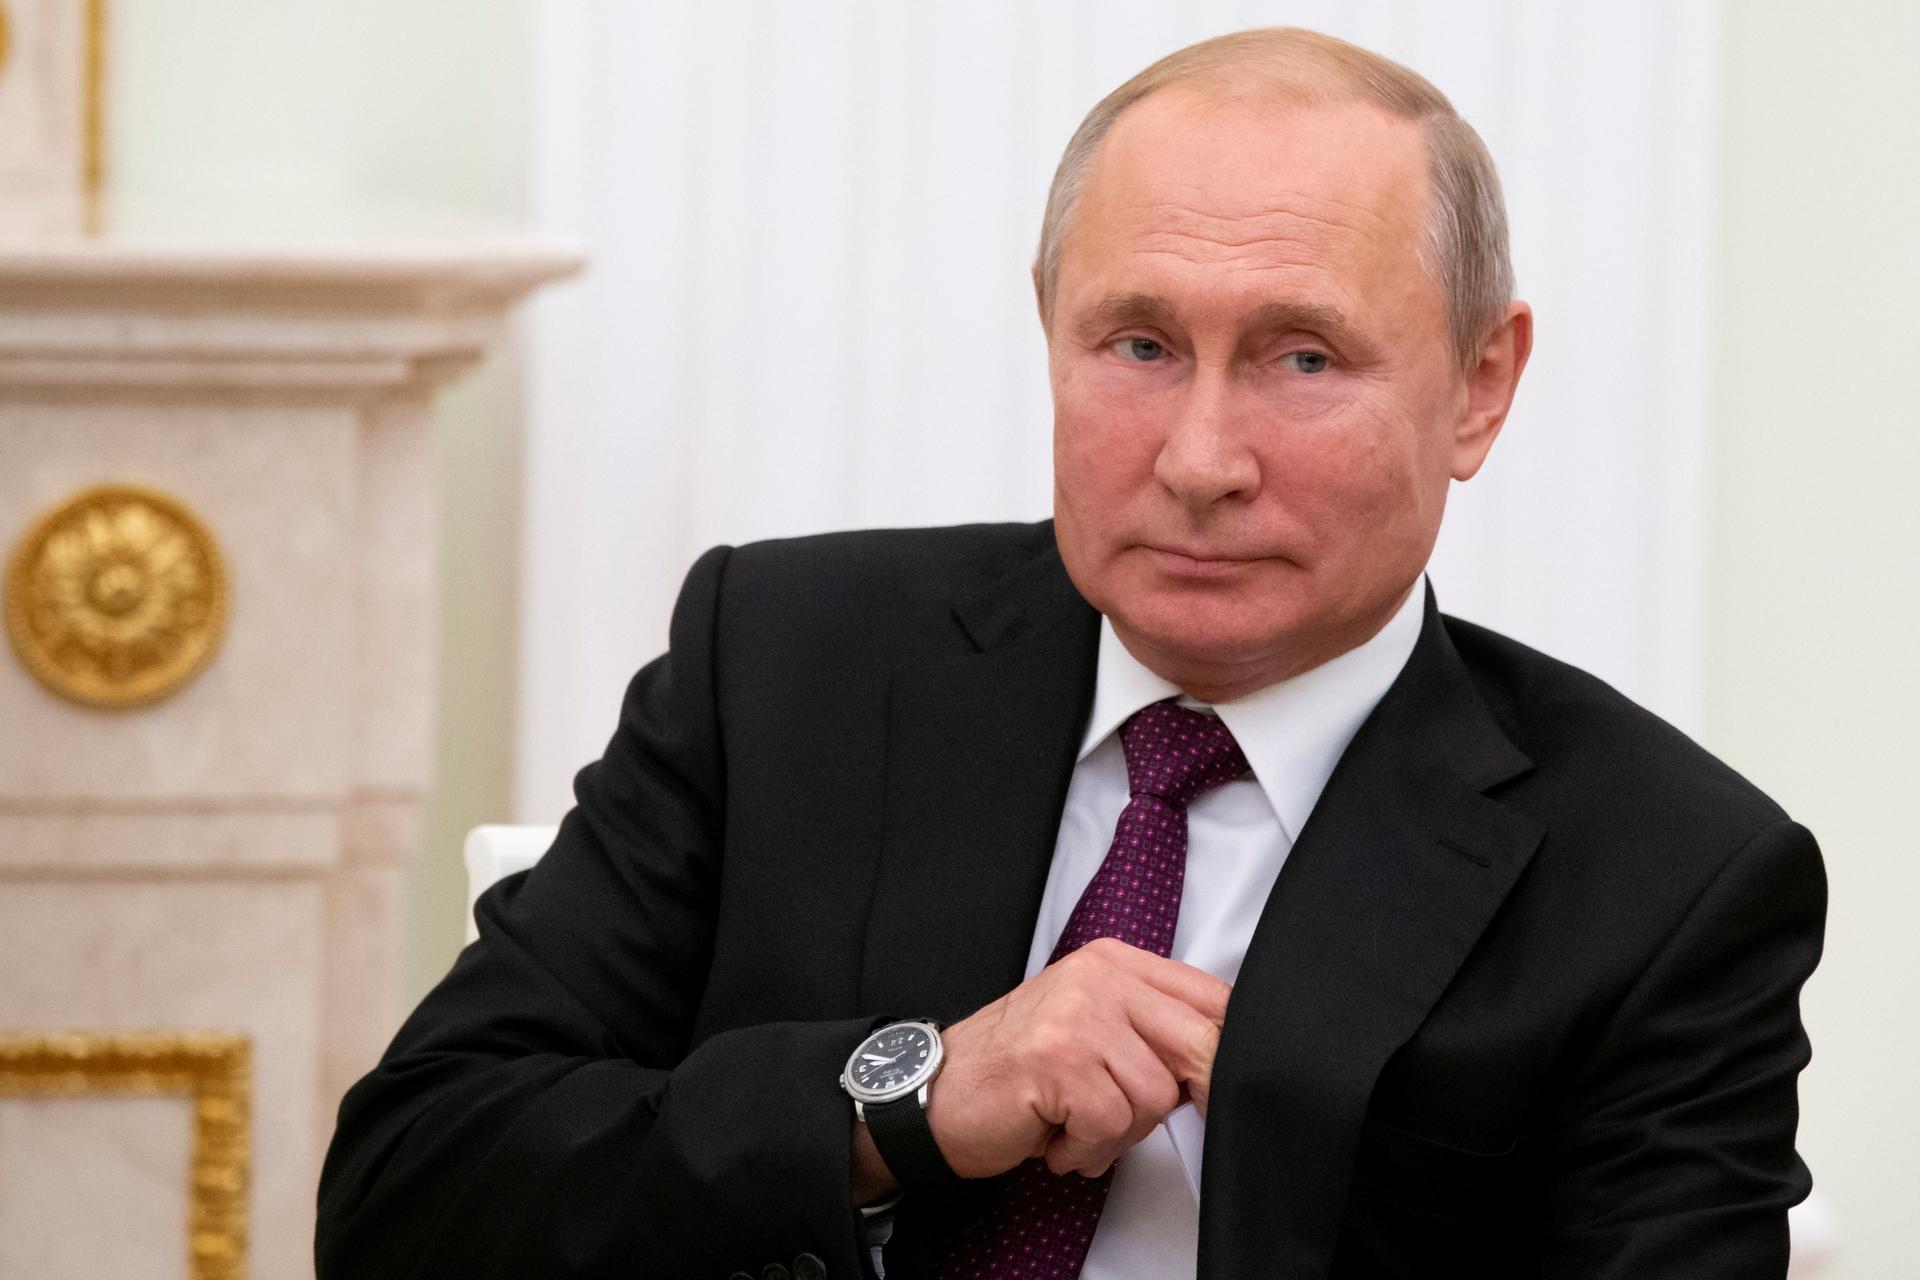 A photo of Russian President Vladimir Putin